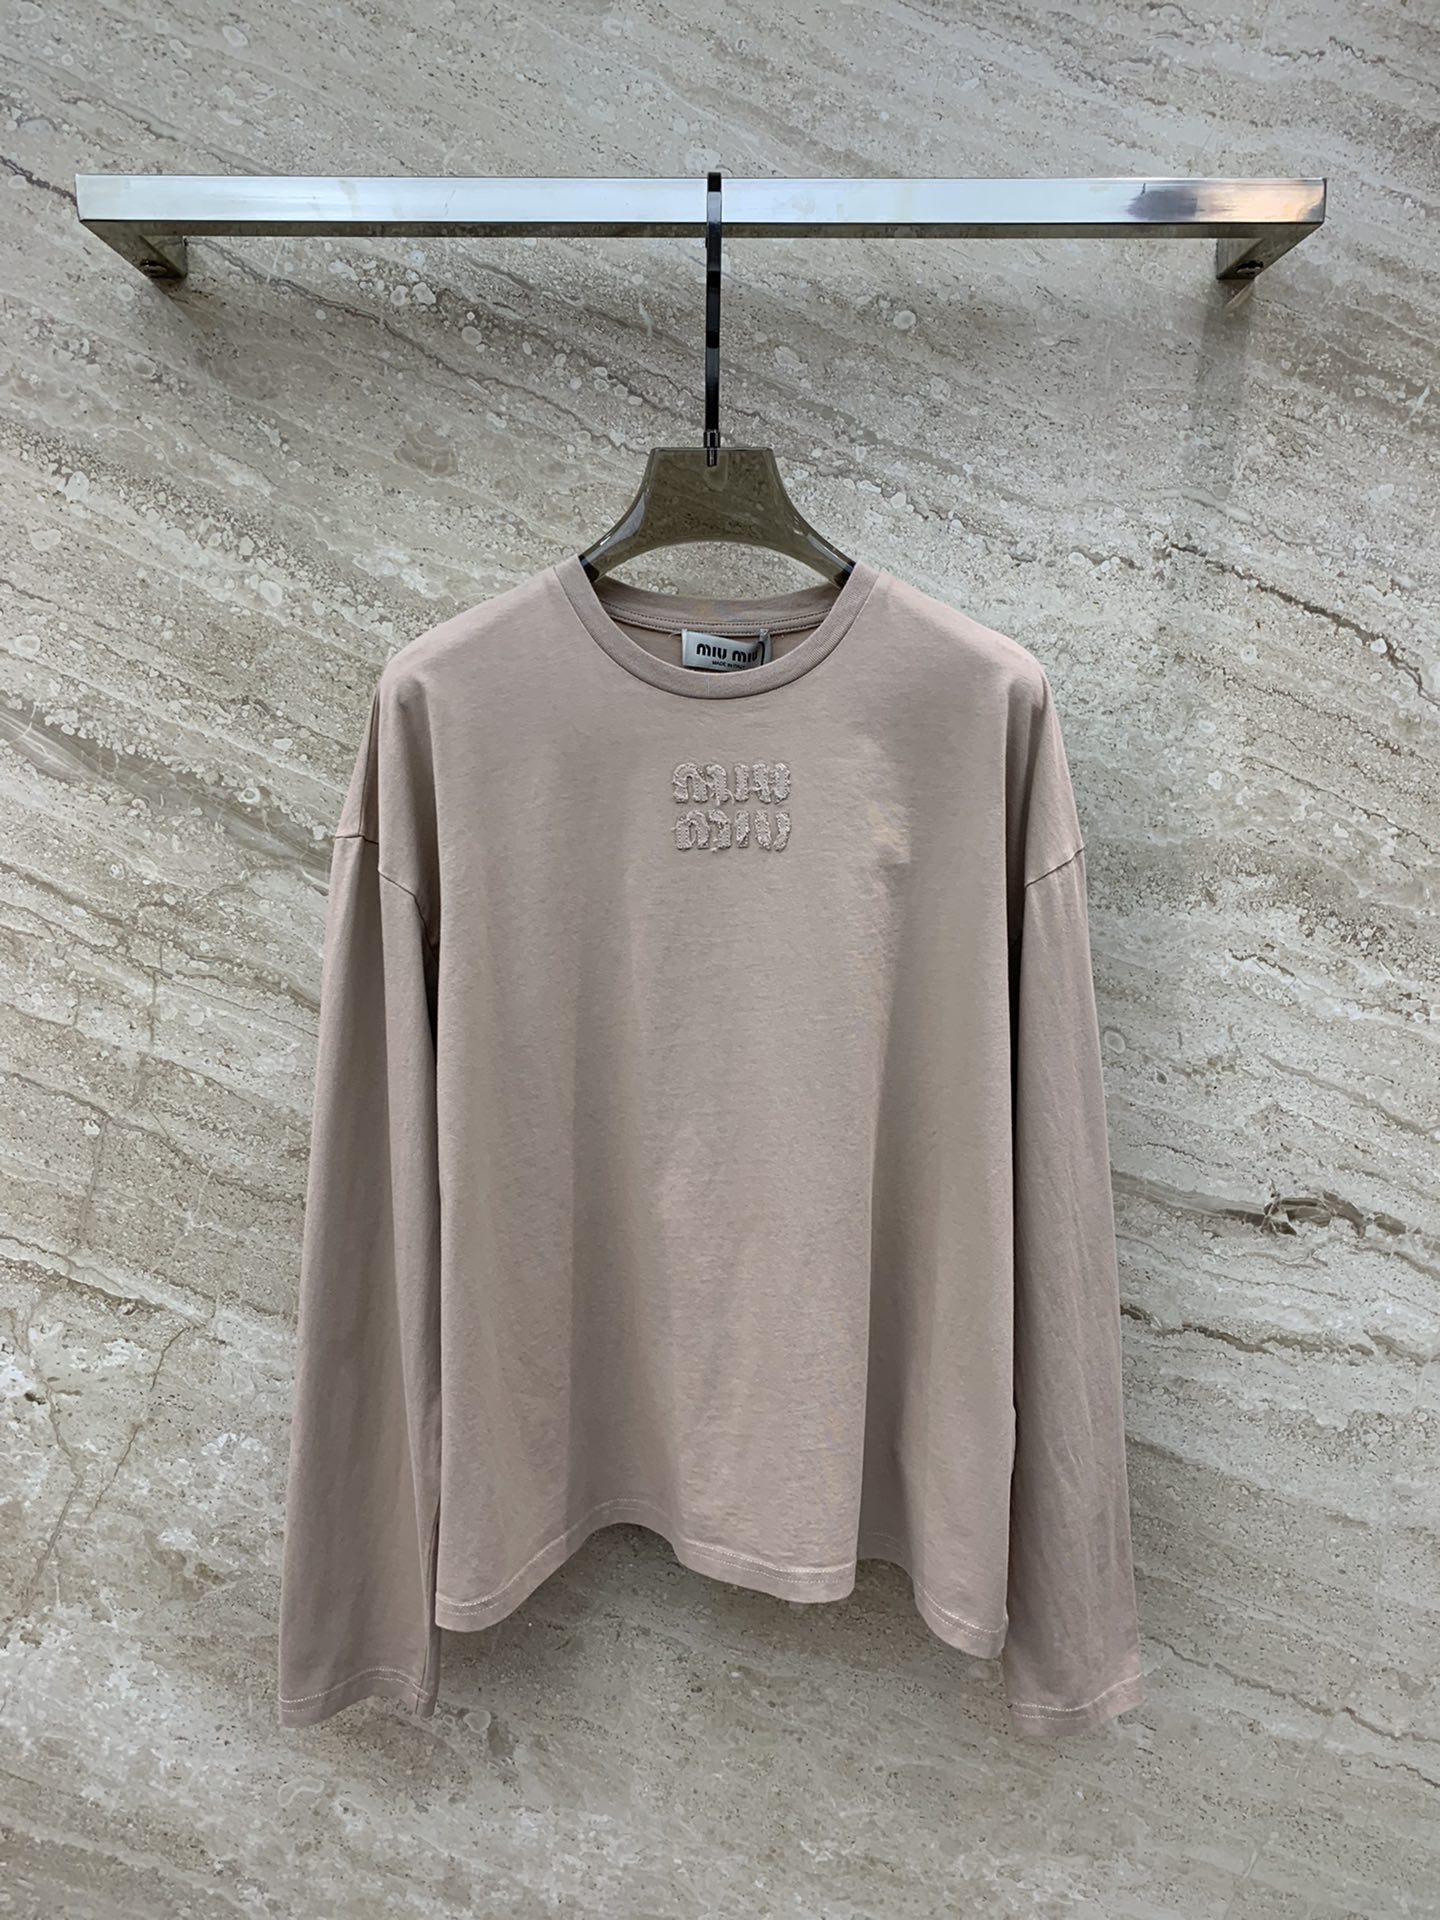 MiuMiu Clothing T-Shirt Spring/Summer Collection Long Sleeve